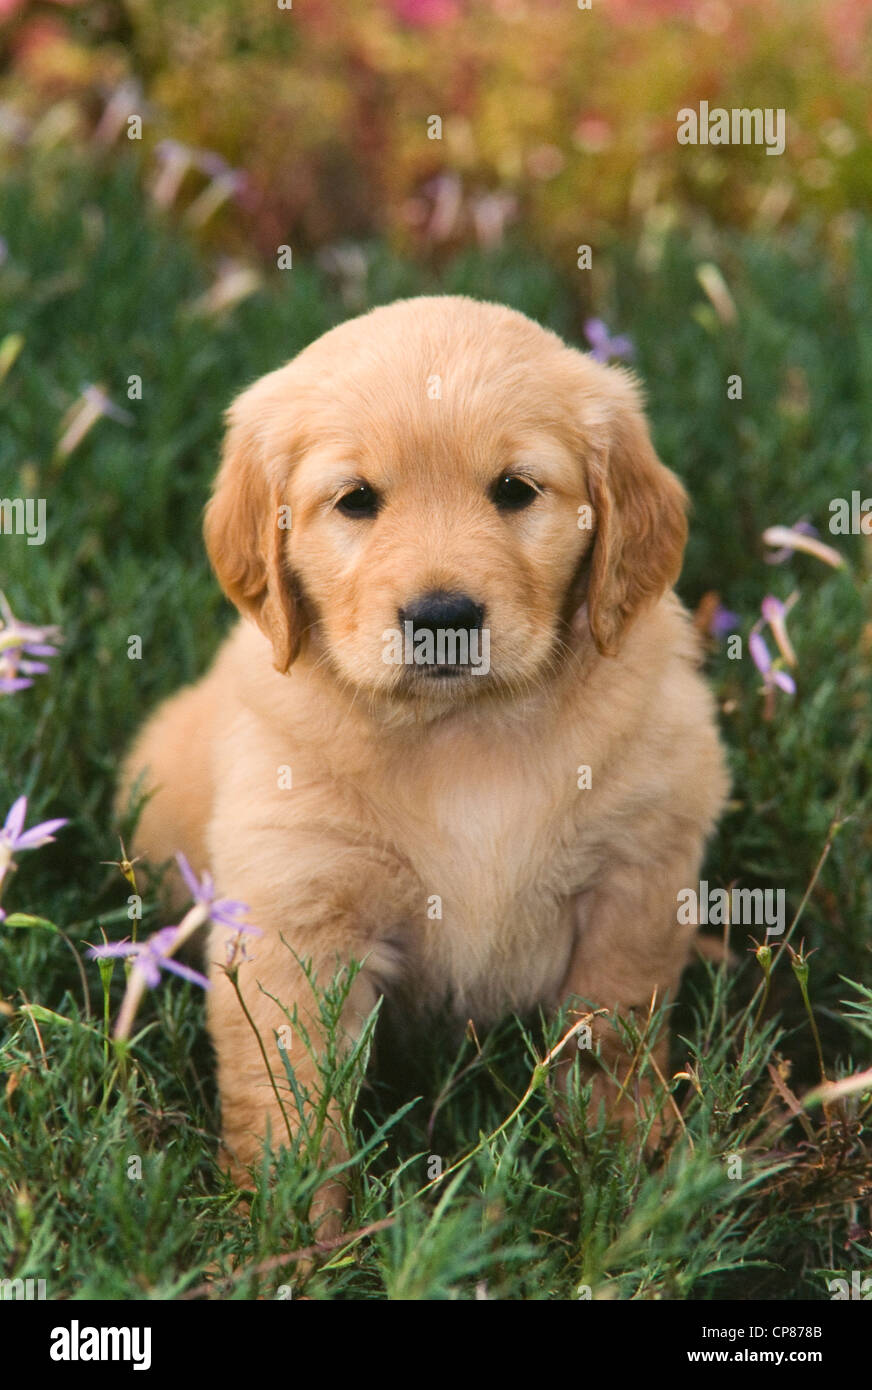 Golden Retriever puppy sitting in flowers Stock Photo